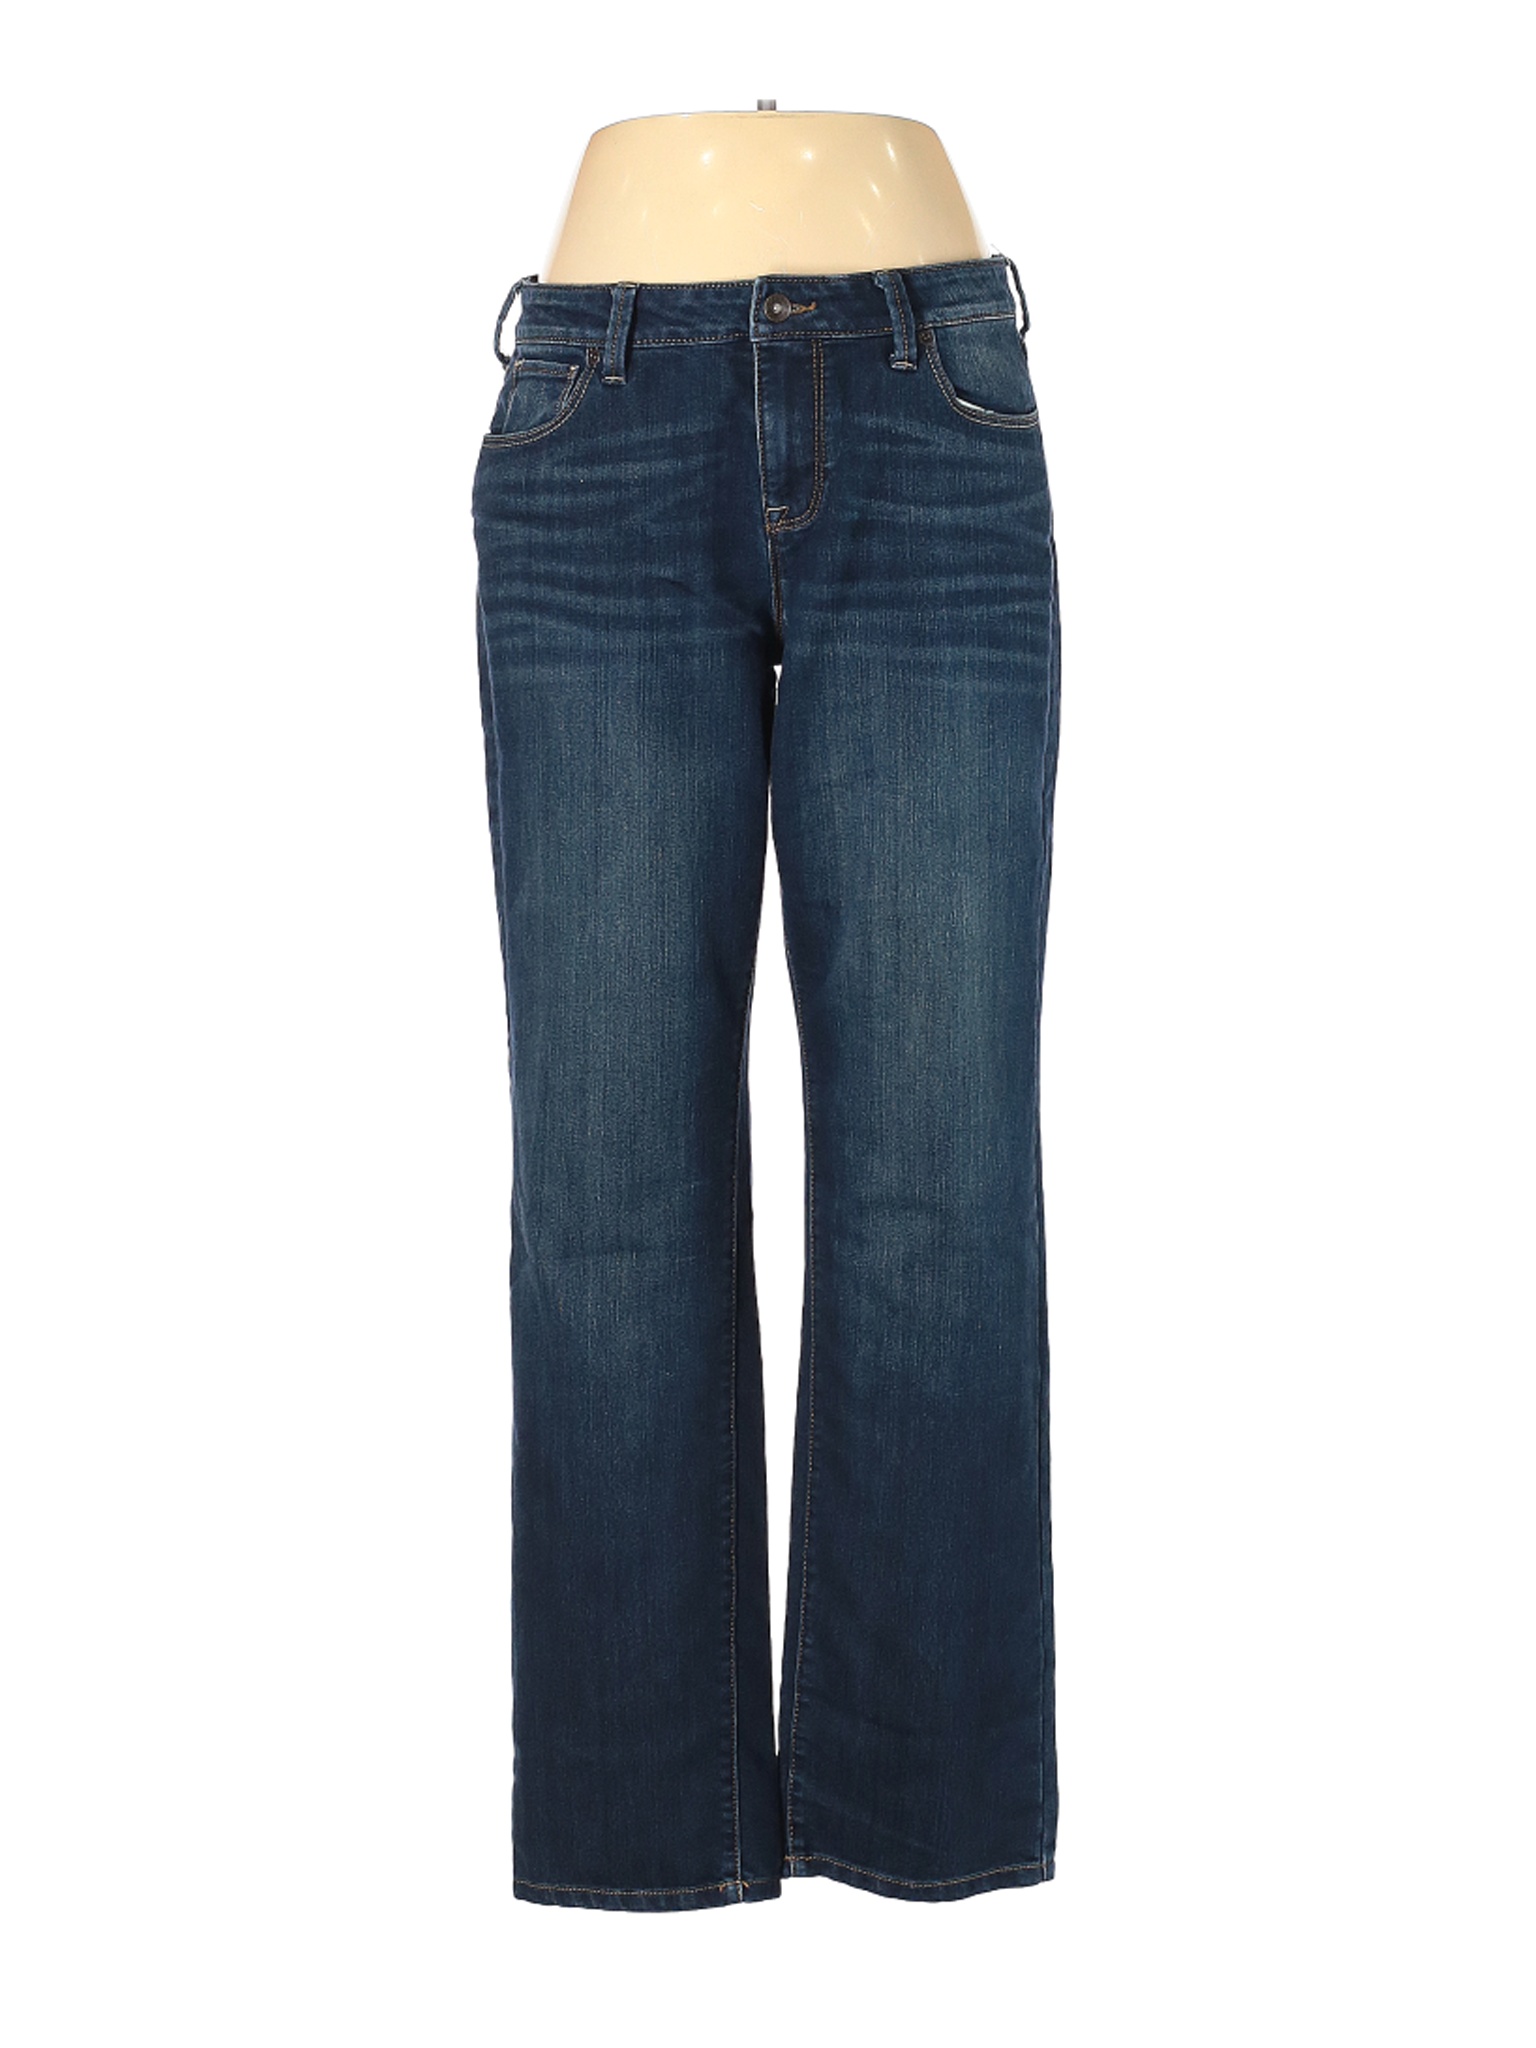 SONOMA life + style Women Blue Jeans 12 | eBay